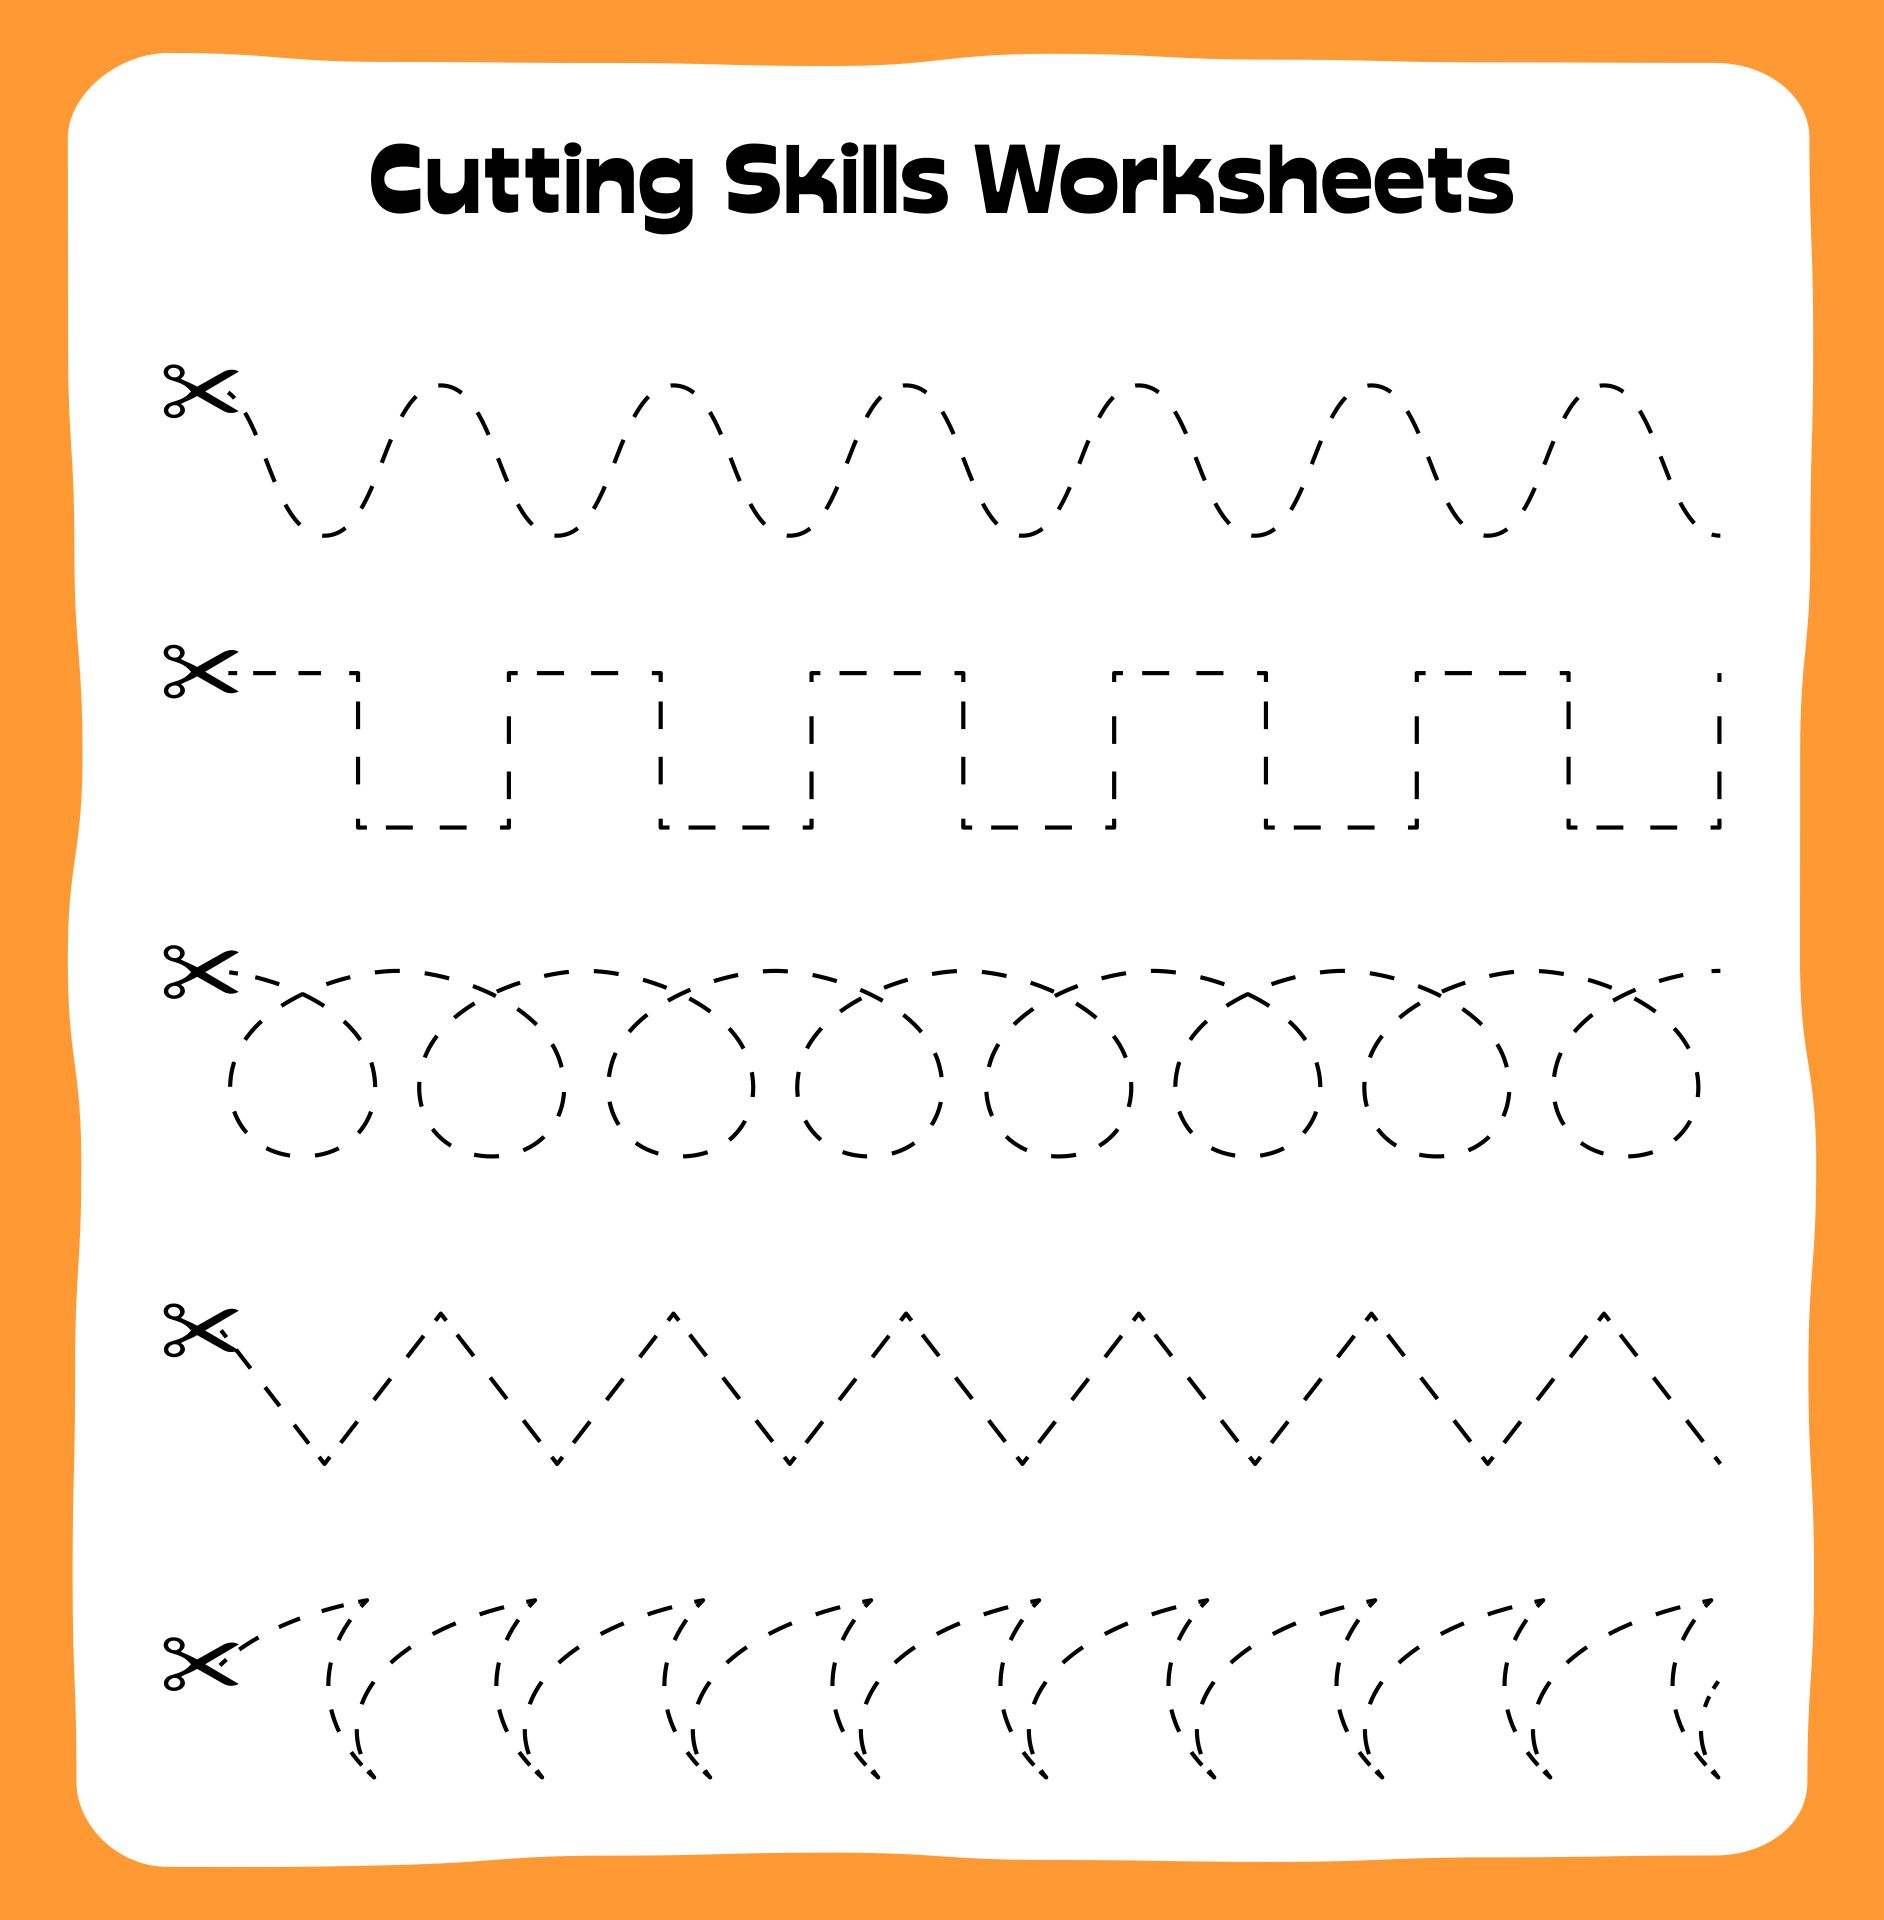 Cutting Skills Worksheets